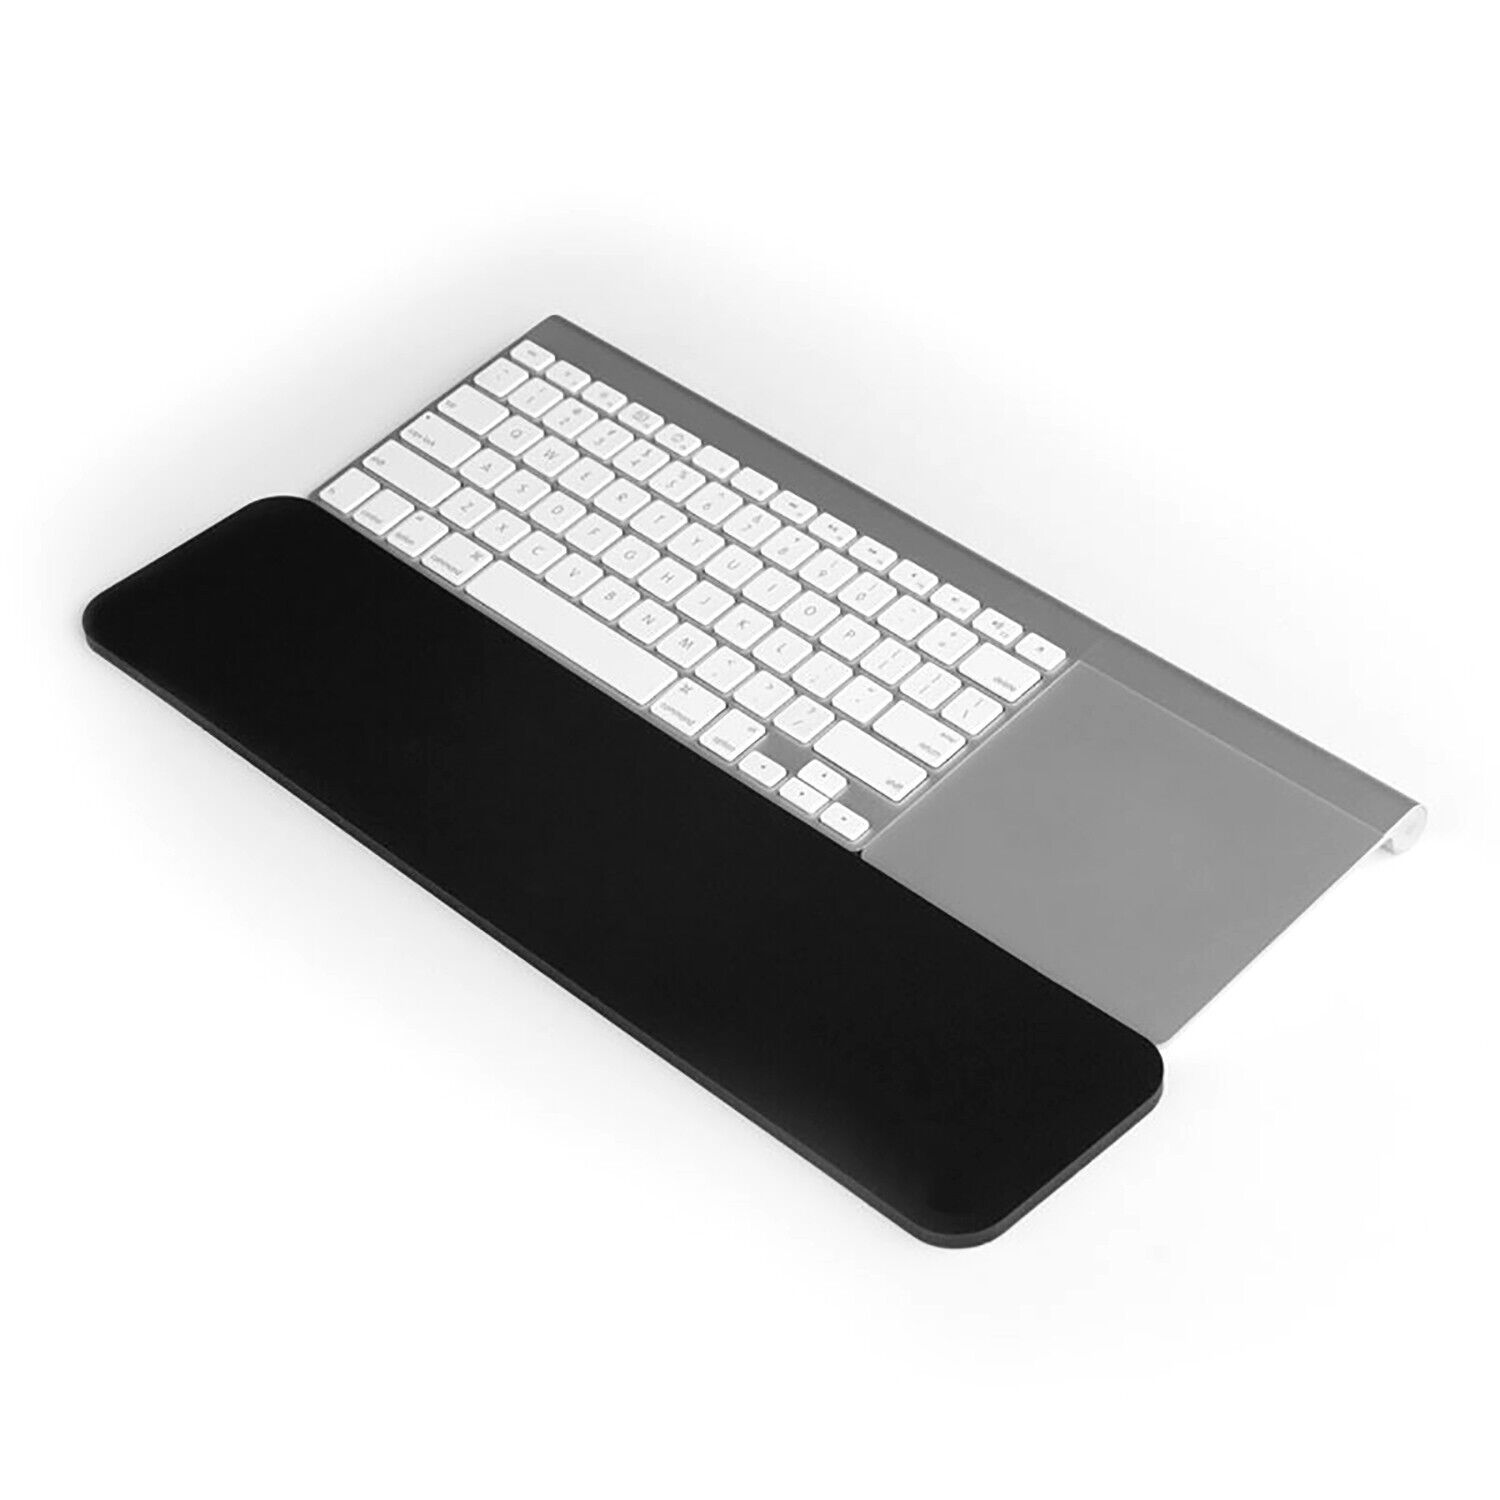 Grifiti SLIM Wrist Pad 17 x 4 X .25 Inch for Apple Wired Keyboard